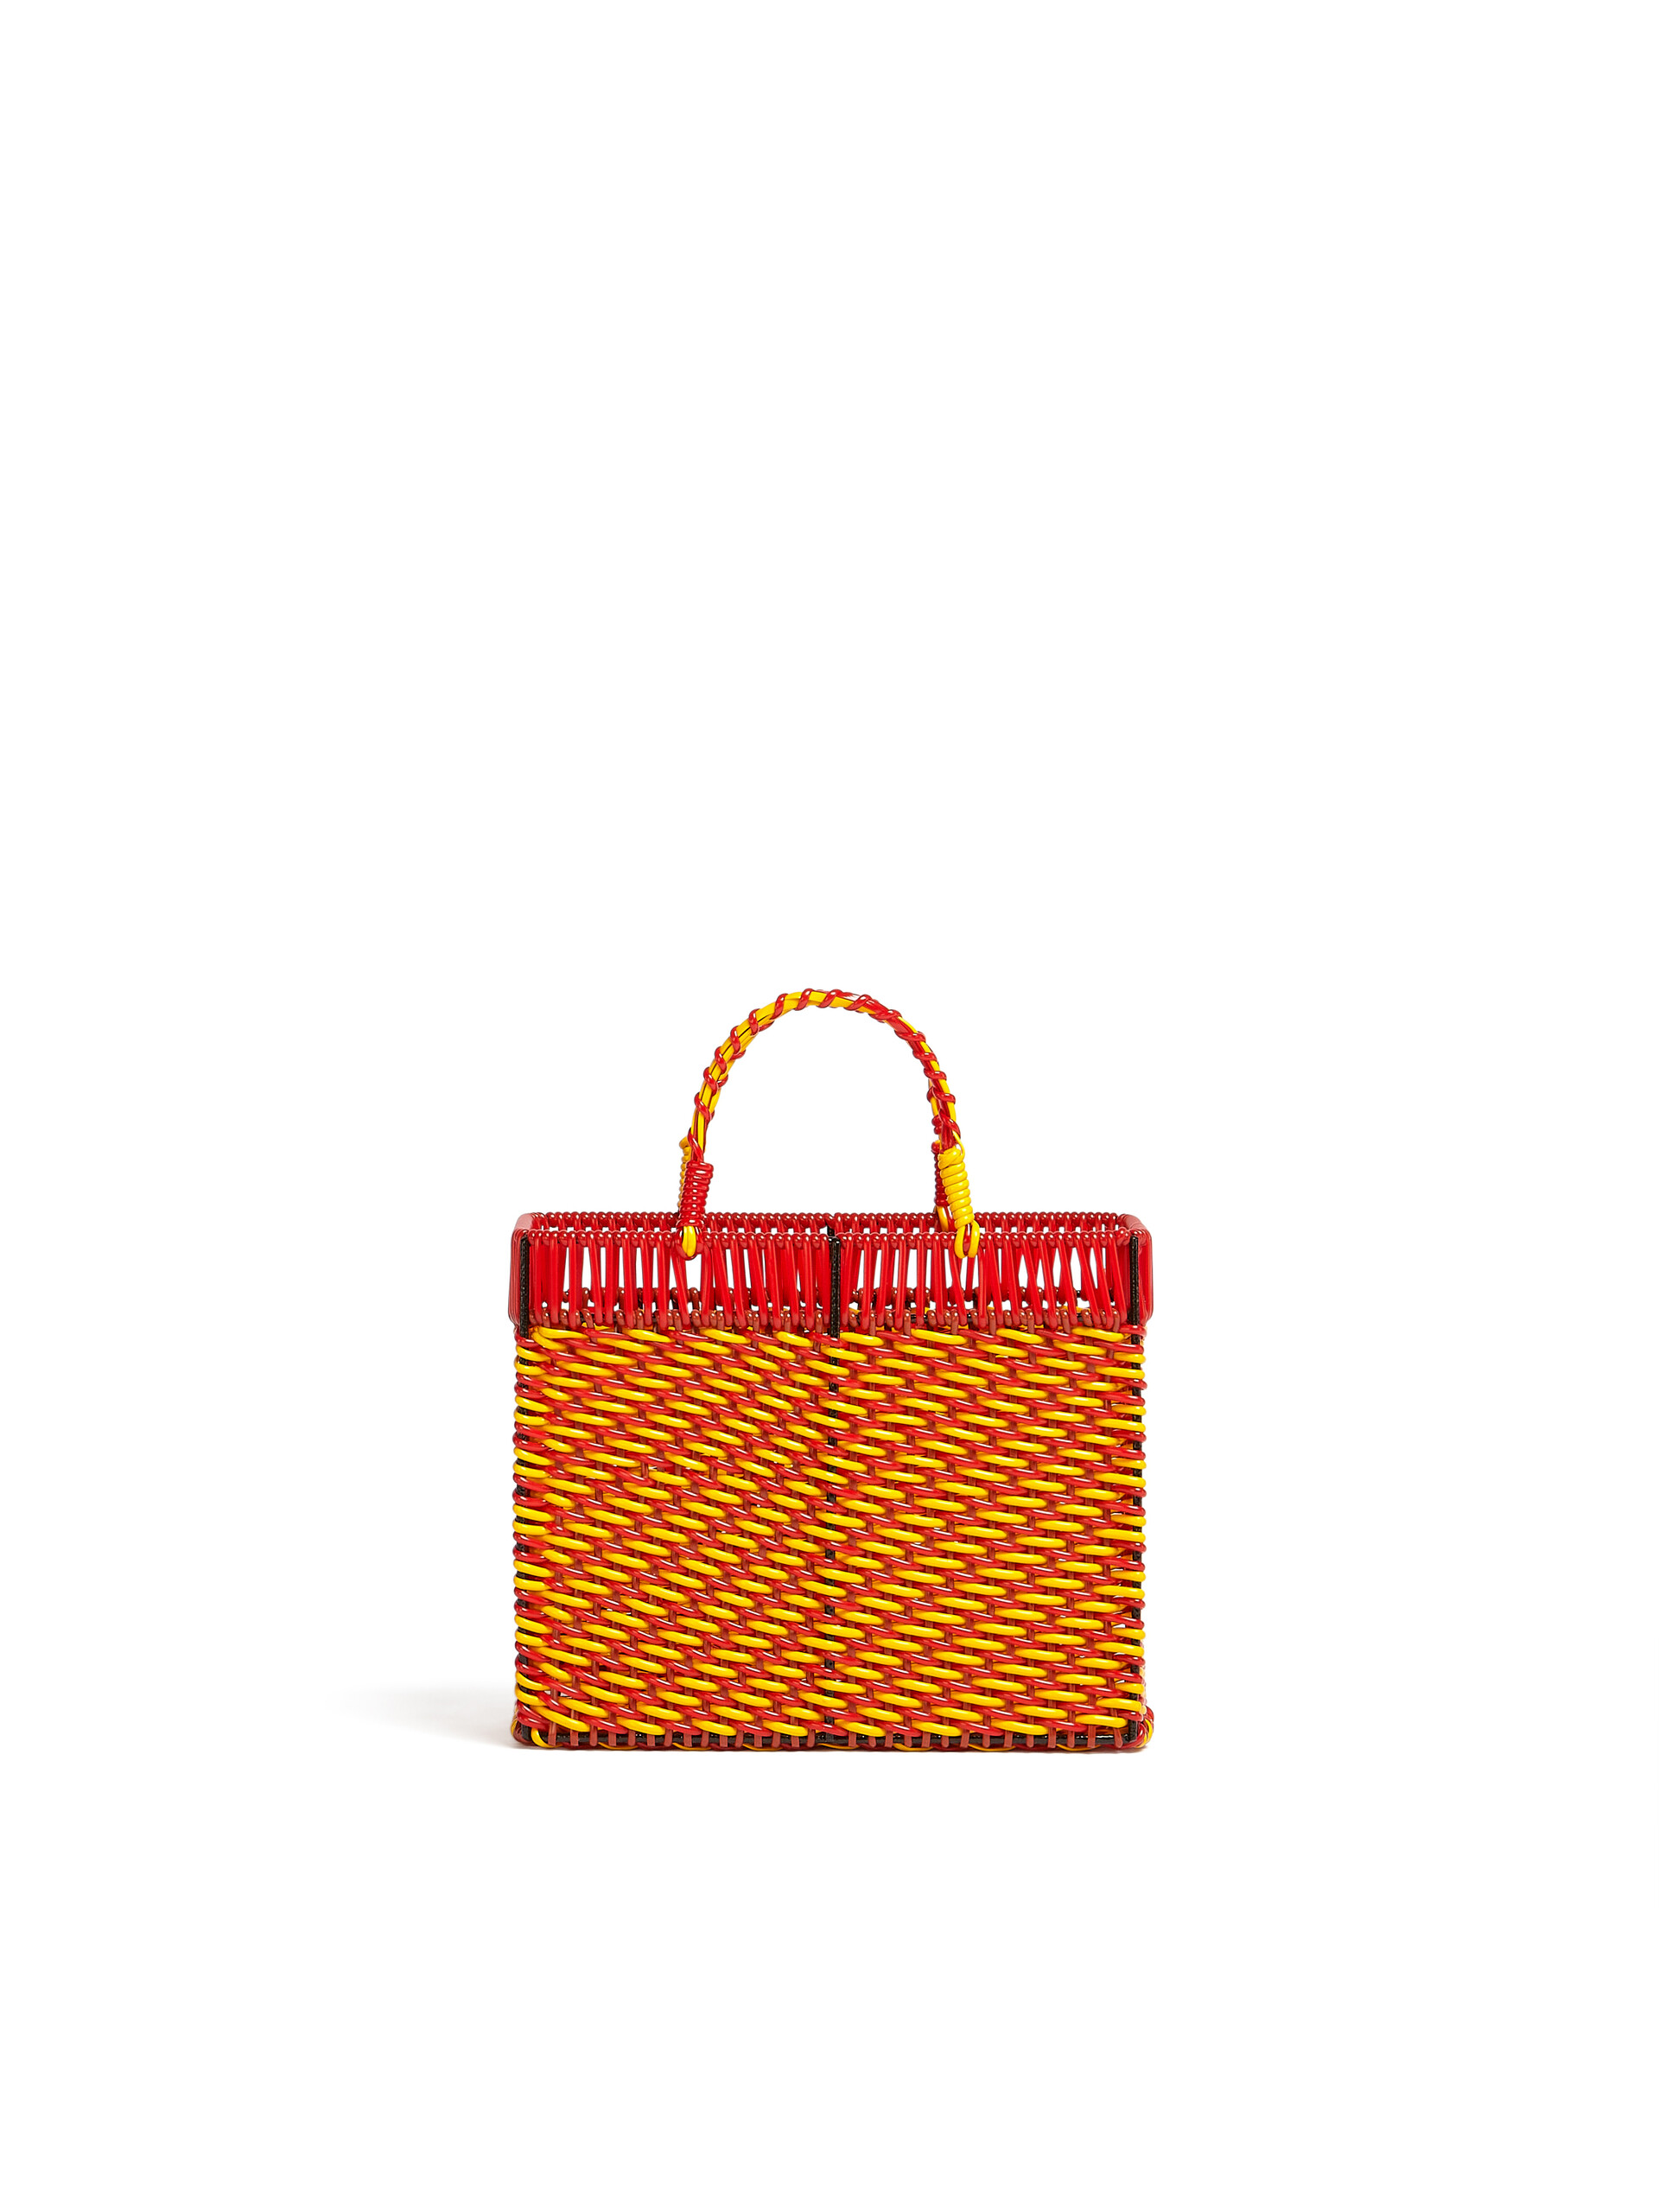 MARNI MARKET orange and red basket - Accessories - Image 3